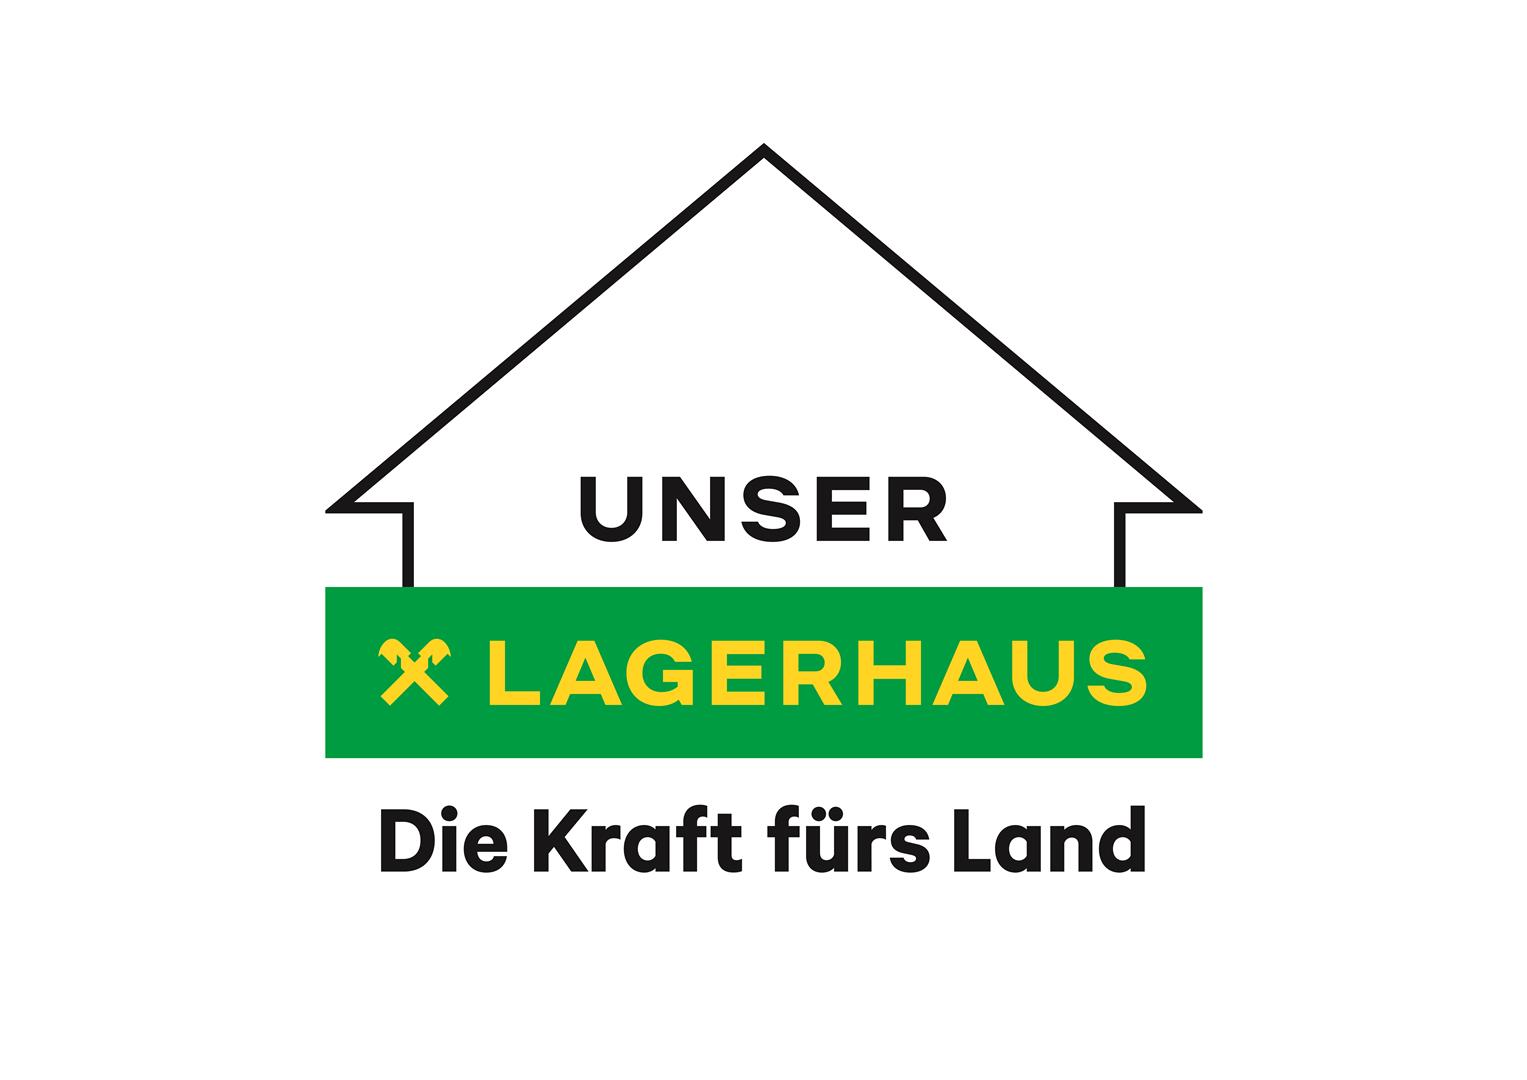 Lagerhaus Logo